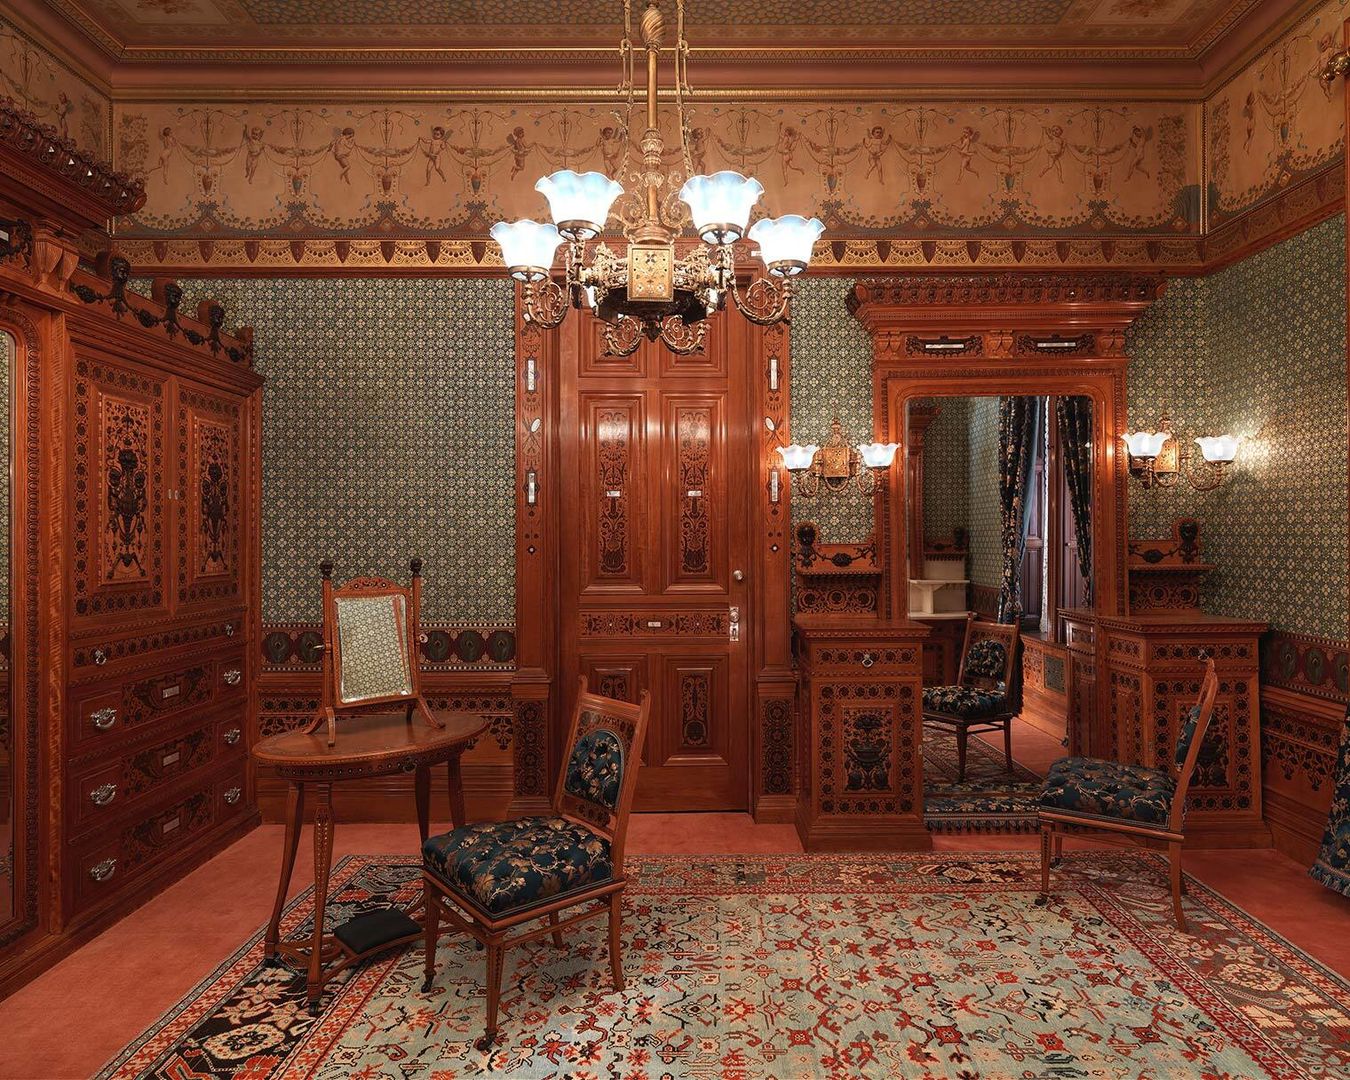 An ornate wood-paneled dressing room